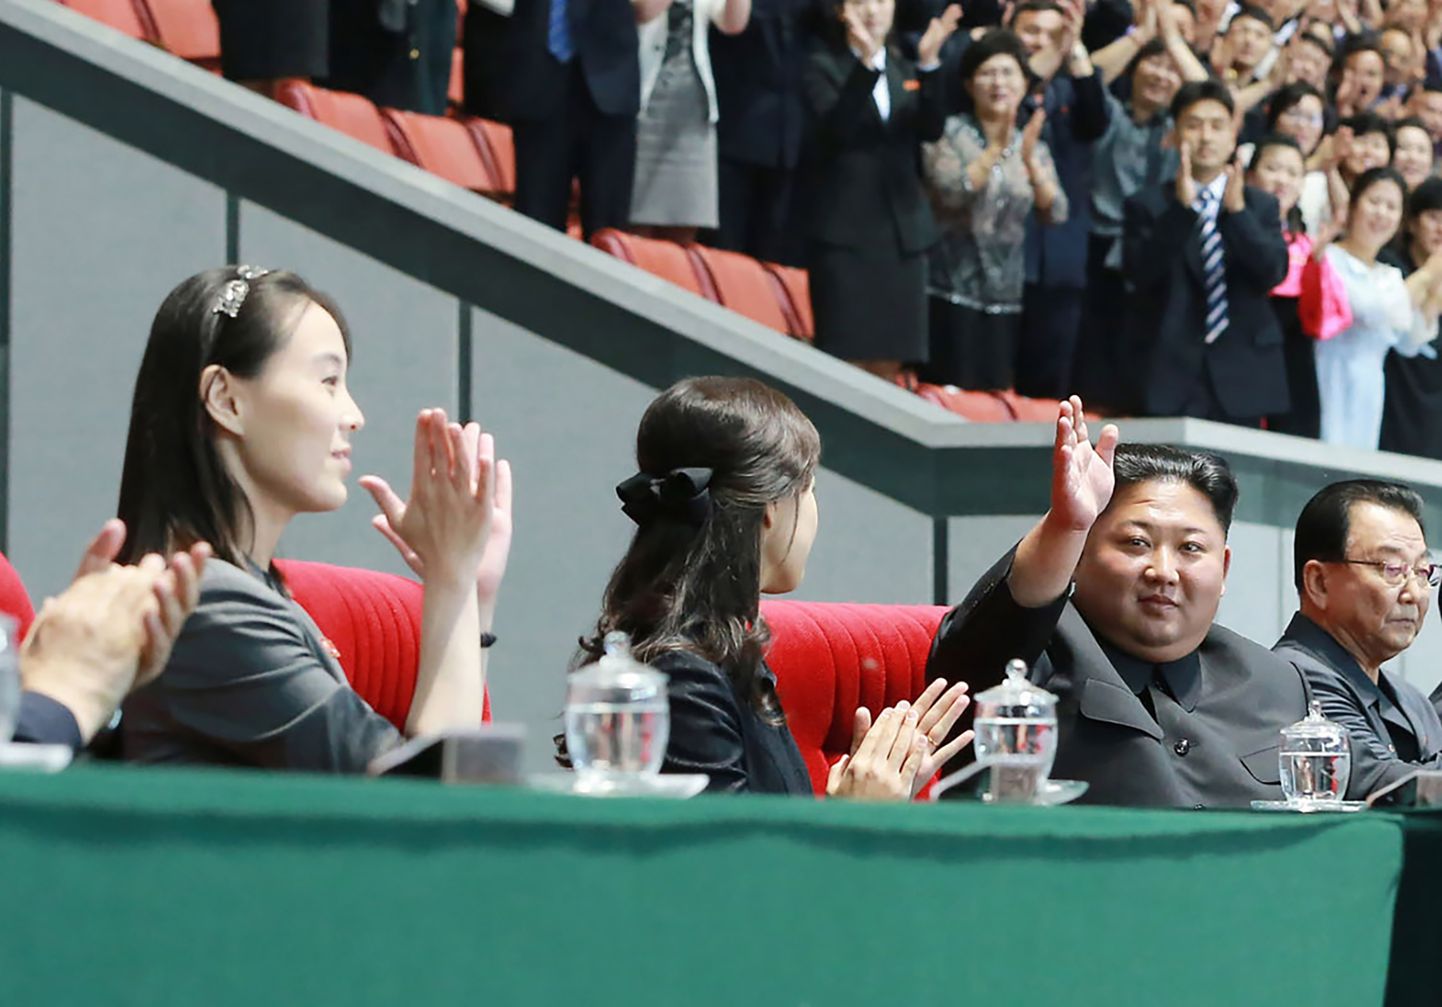 Põhja-Korea diktaator Kim Jong-un rahvale lehvitamas. Temast vasakul abikaasa Ri Sol-ju ning õde Kim Yo-jong.